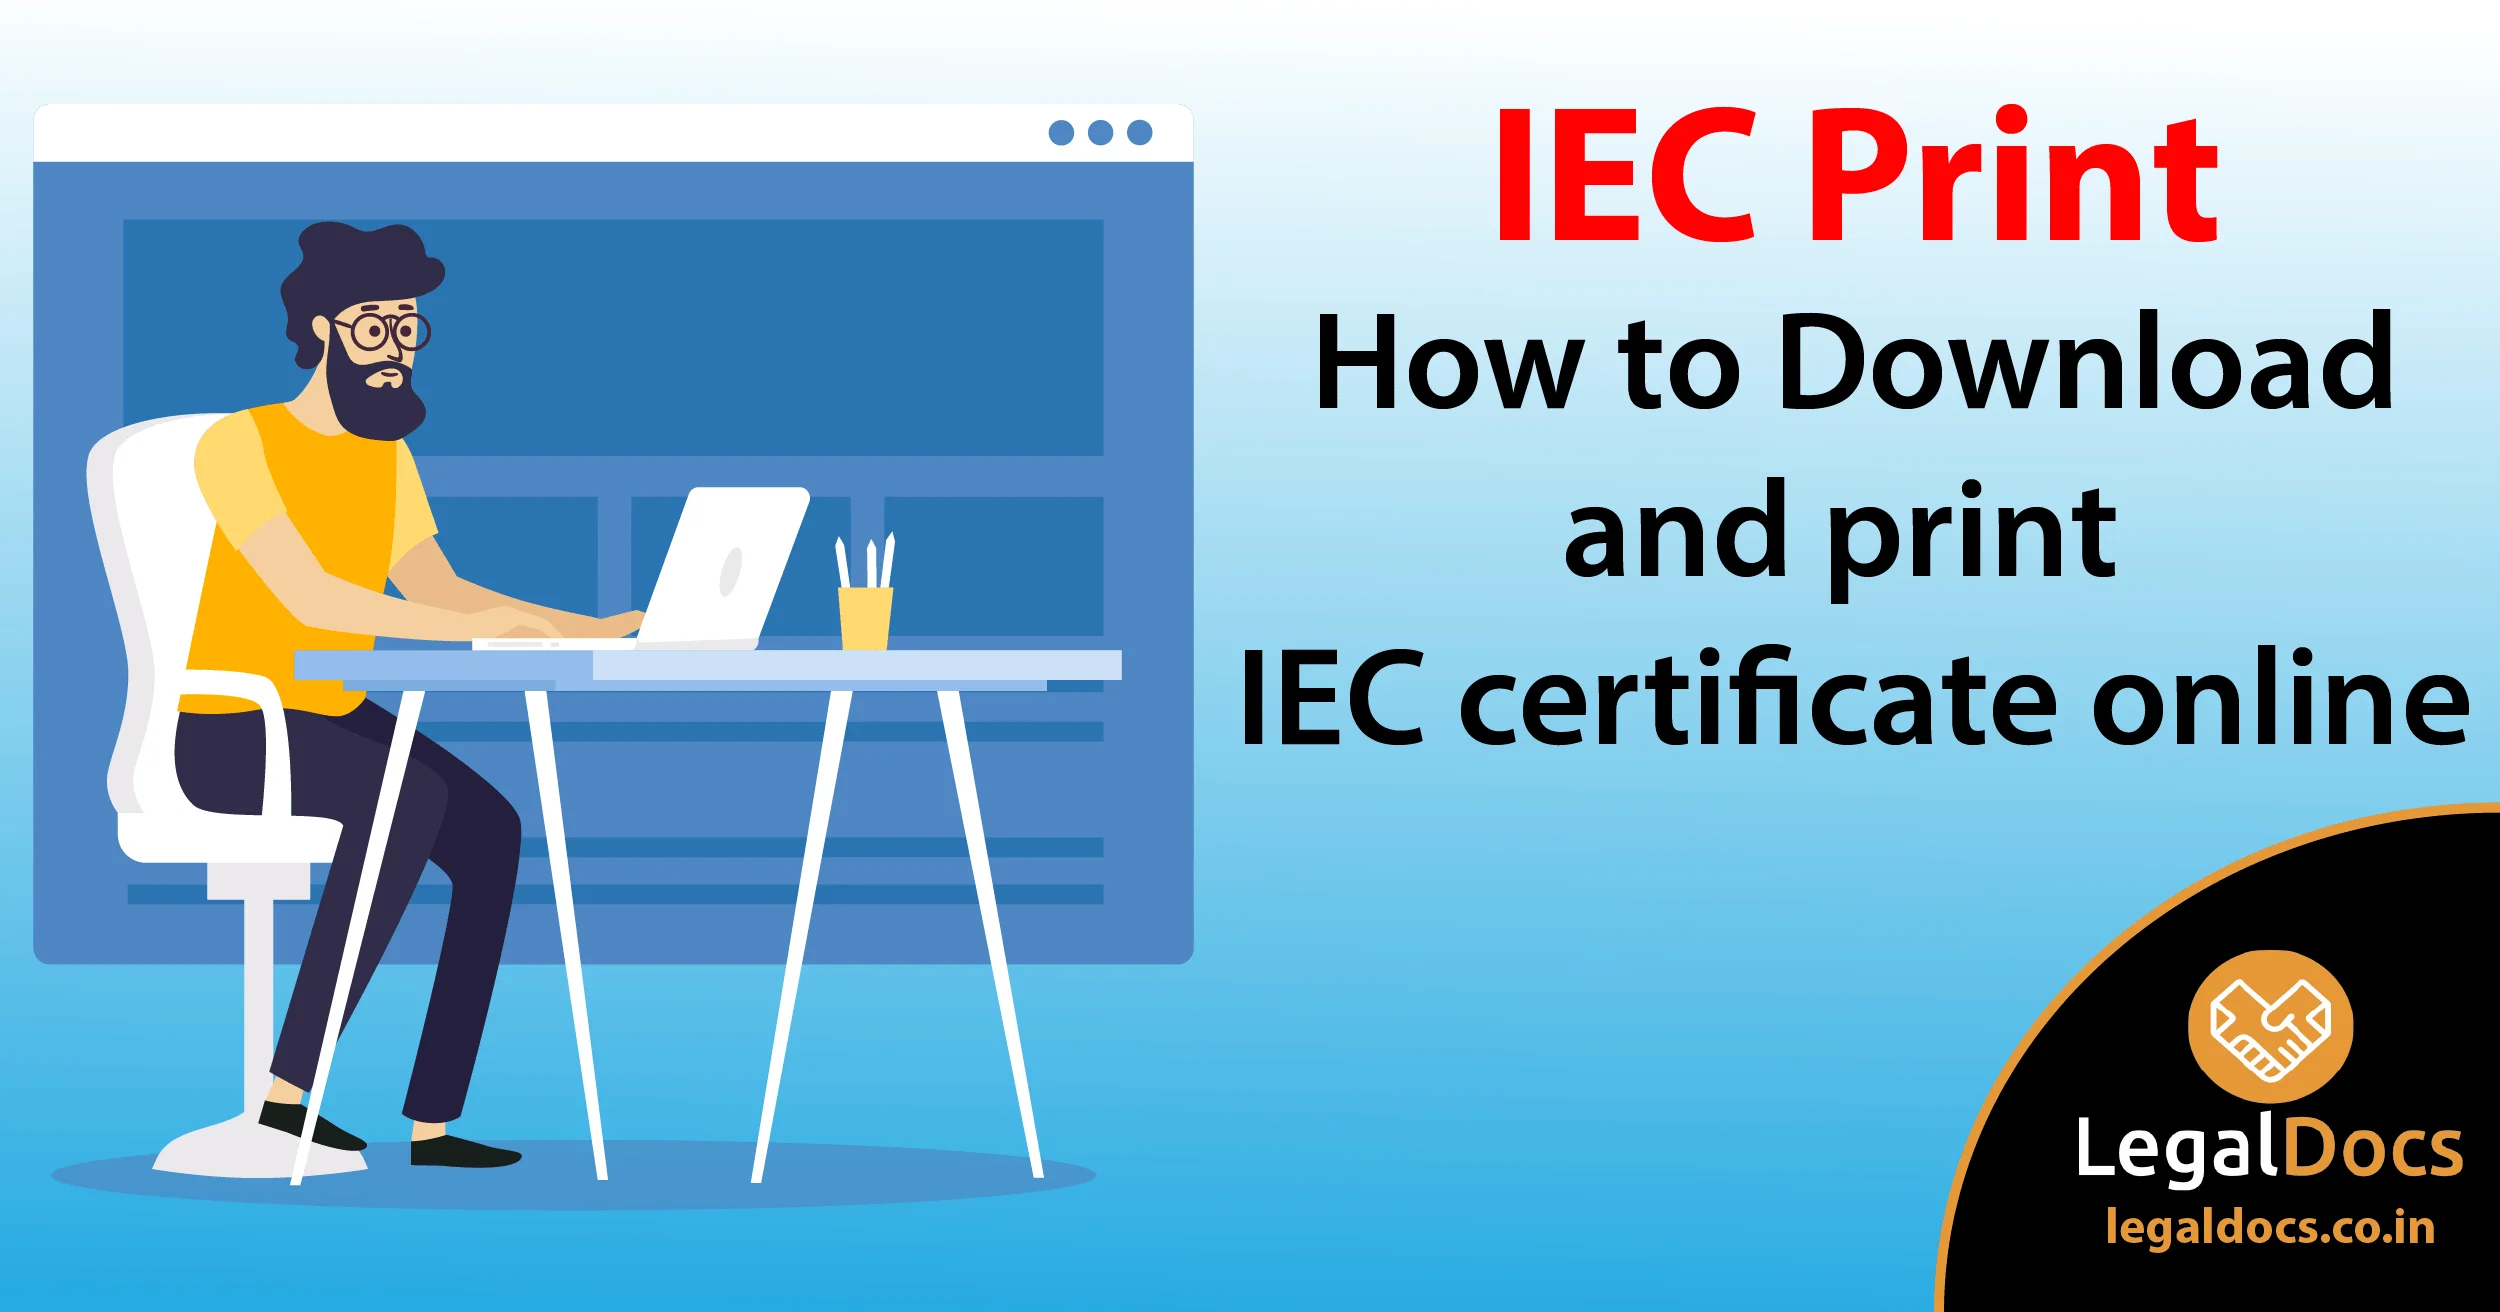  IEC Print Online